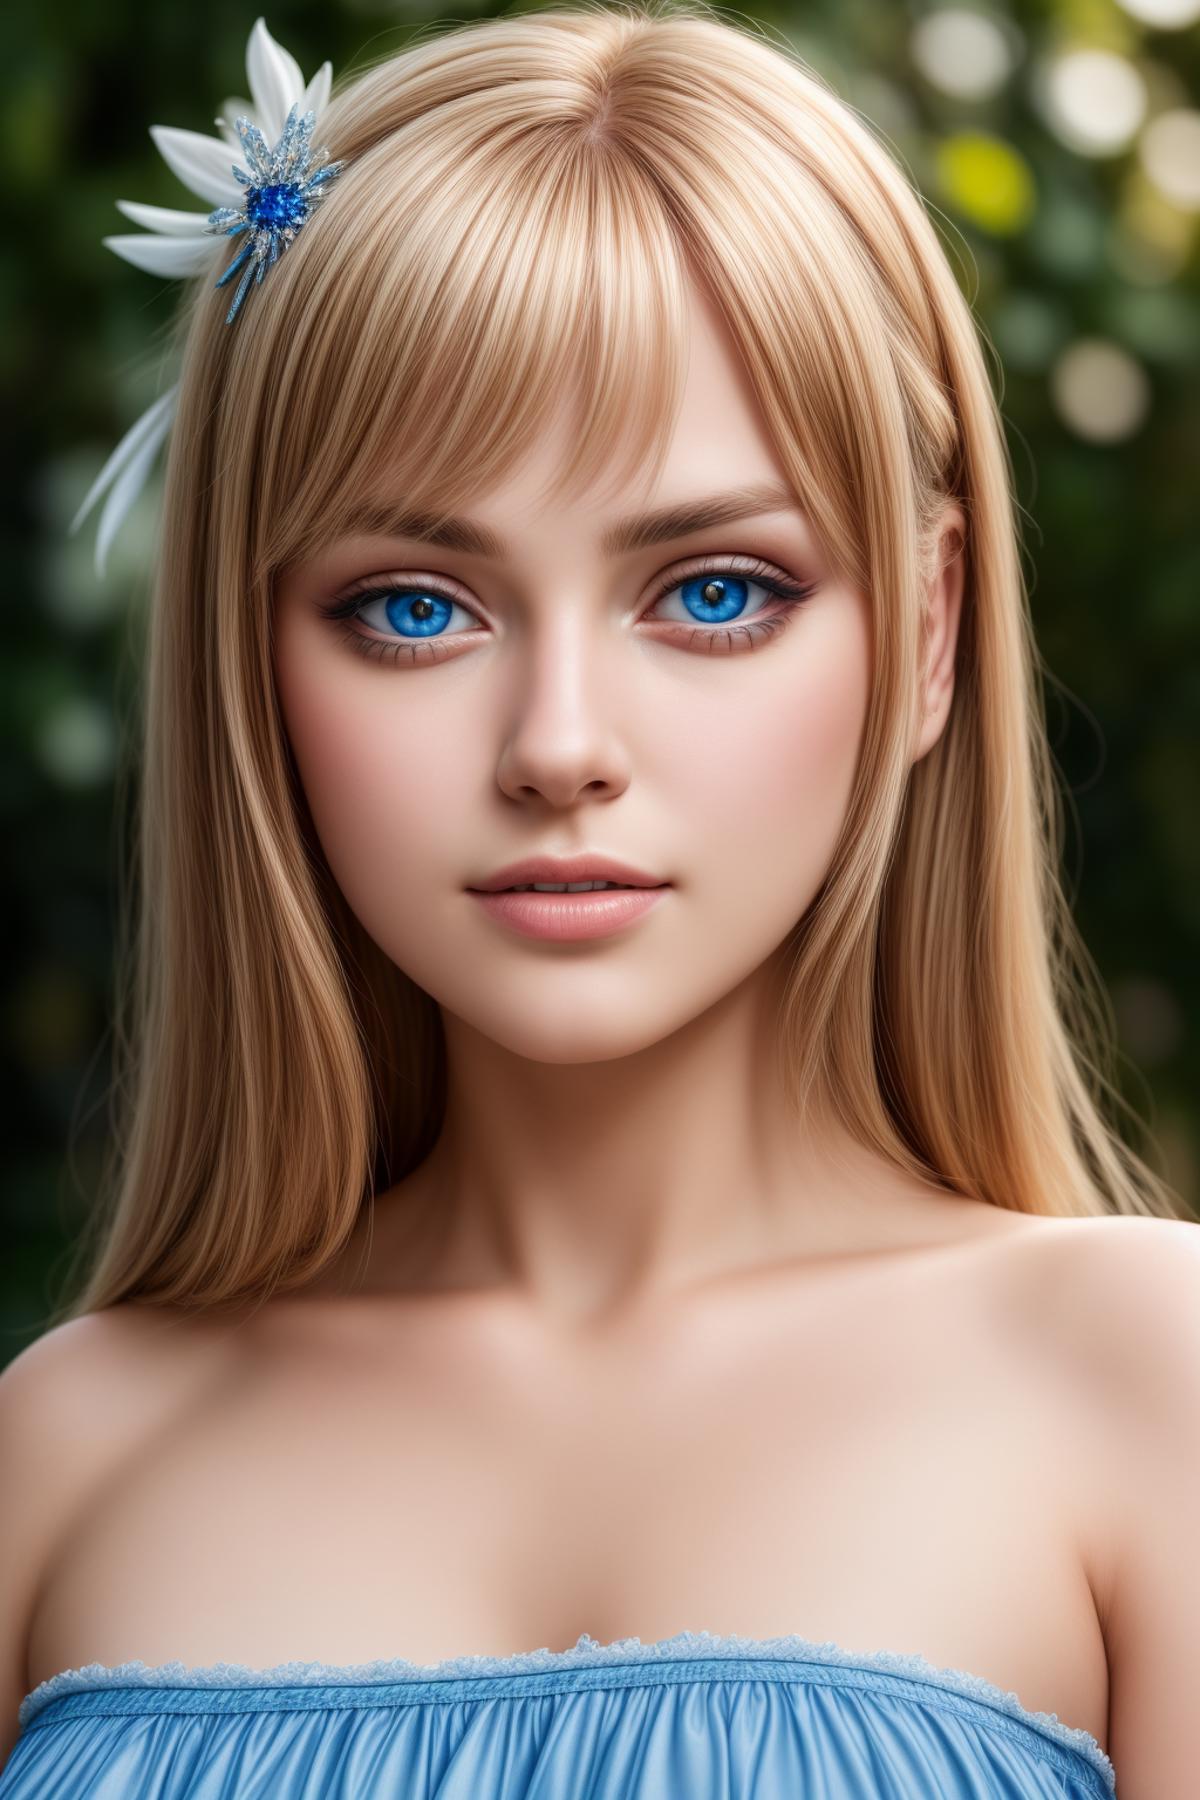 AI model image by Dragon1123